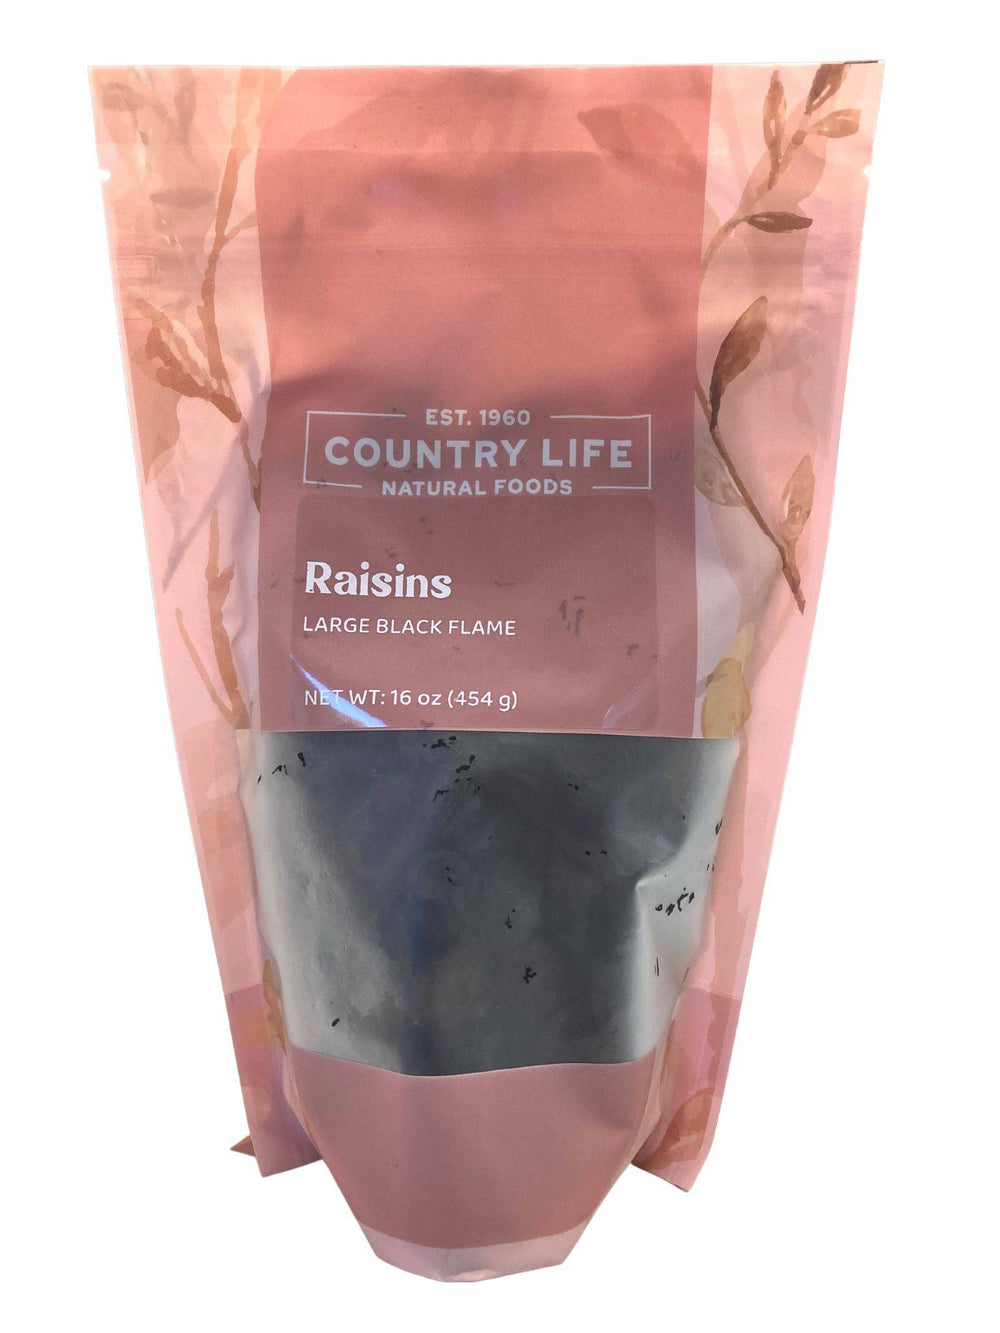 Raisins, Black Flame Large - Country Life Natural Foods